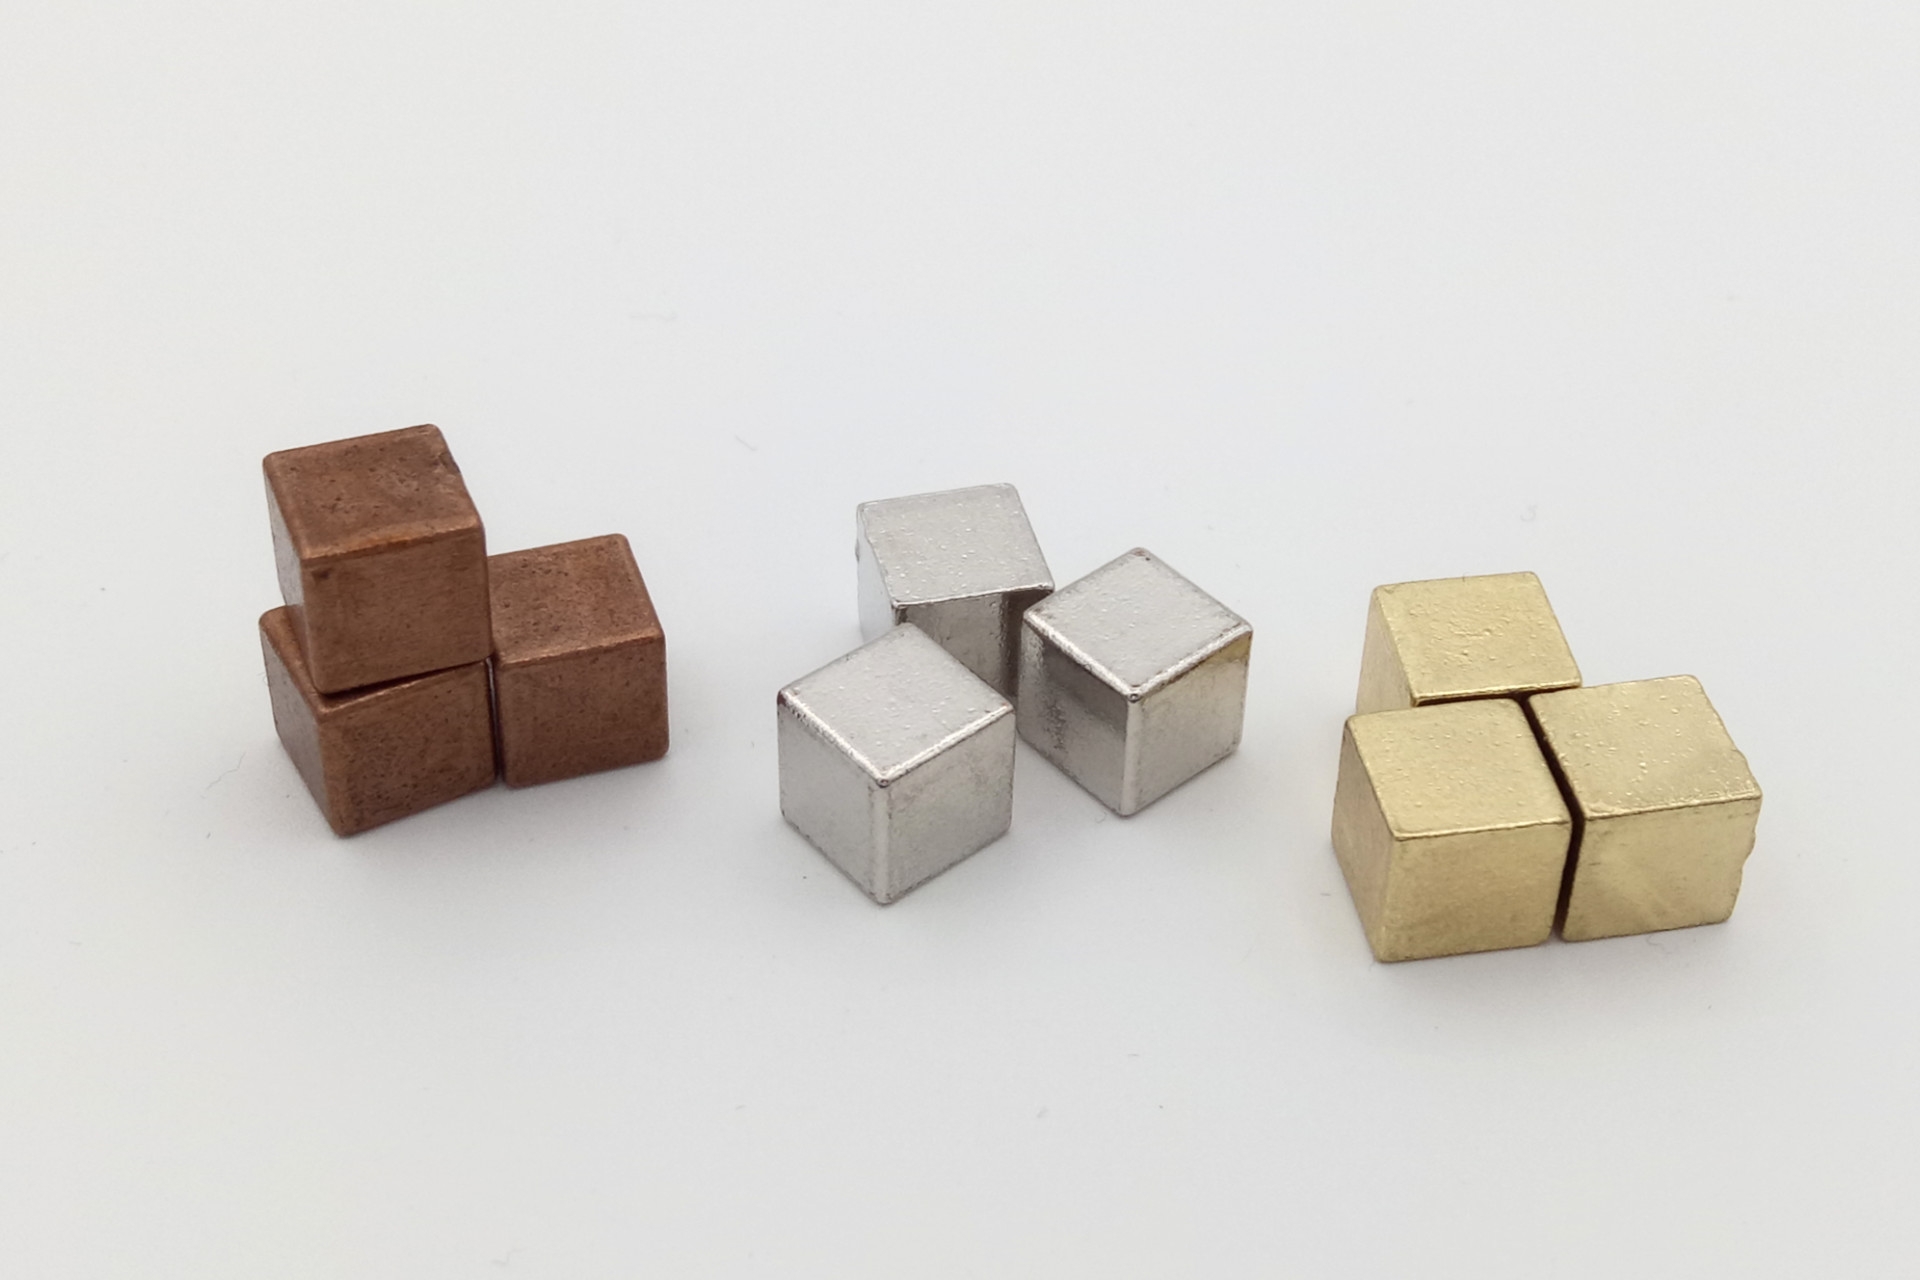 Metal cubes 8mm